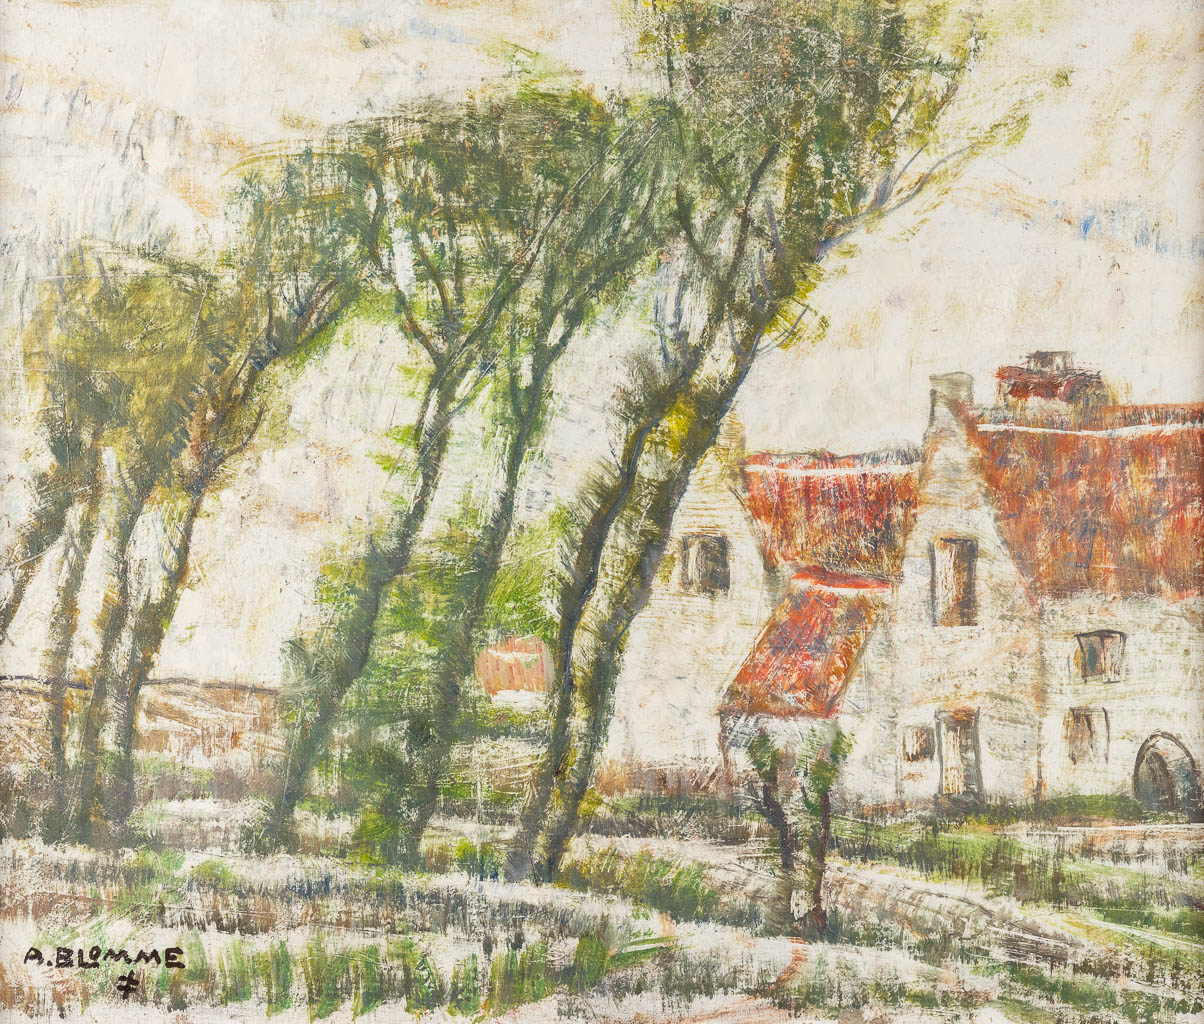 Alfons BLOMME (1889-1979) 'Landscape with farmhouse' oil on canvas. (W:58 x H:49 cm)